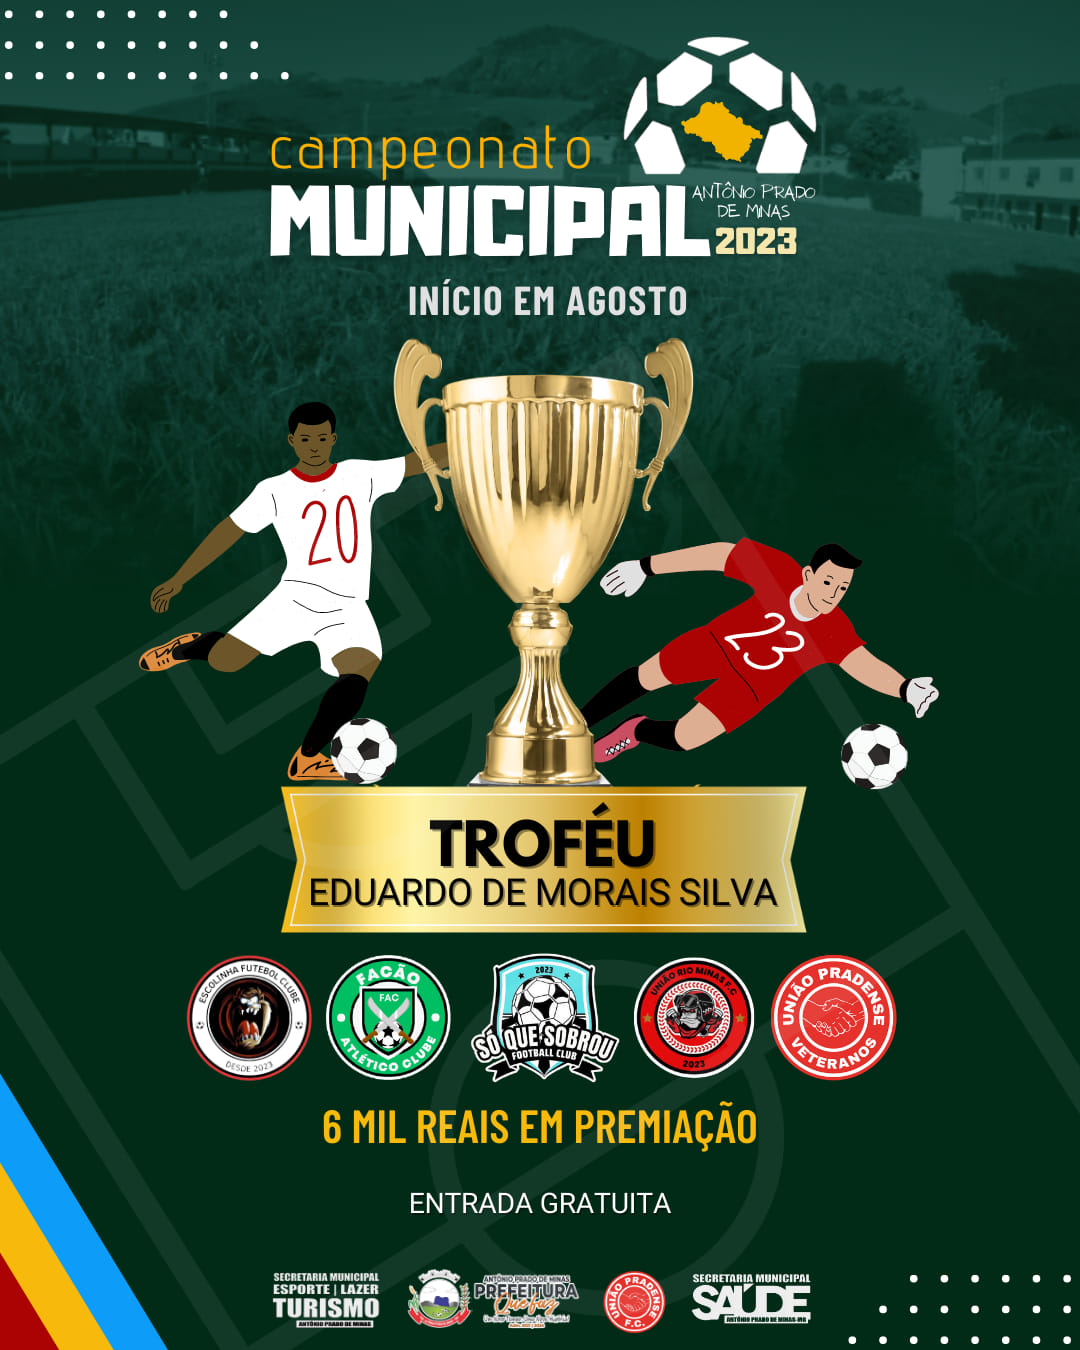 Campeonato Municipal de Futebol